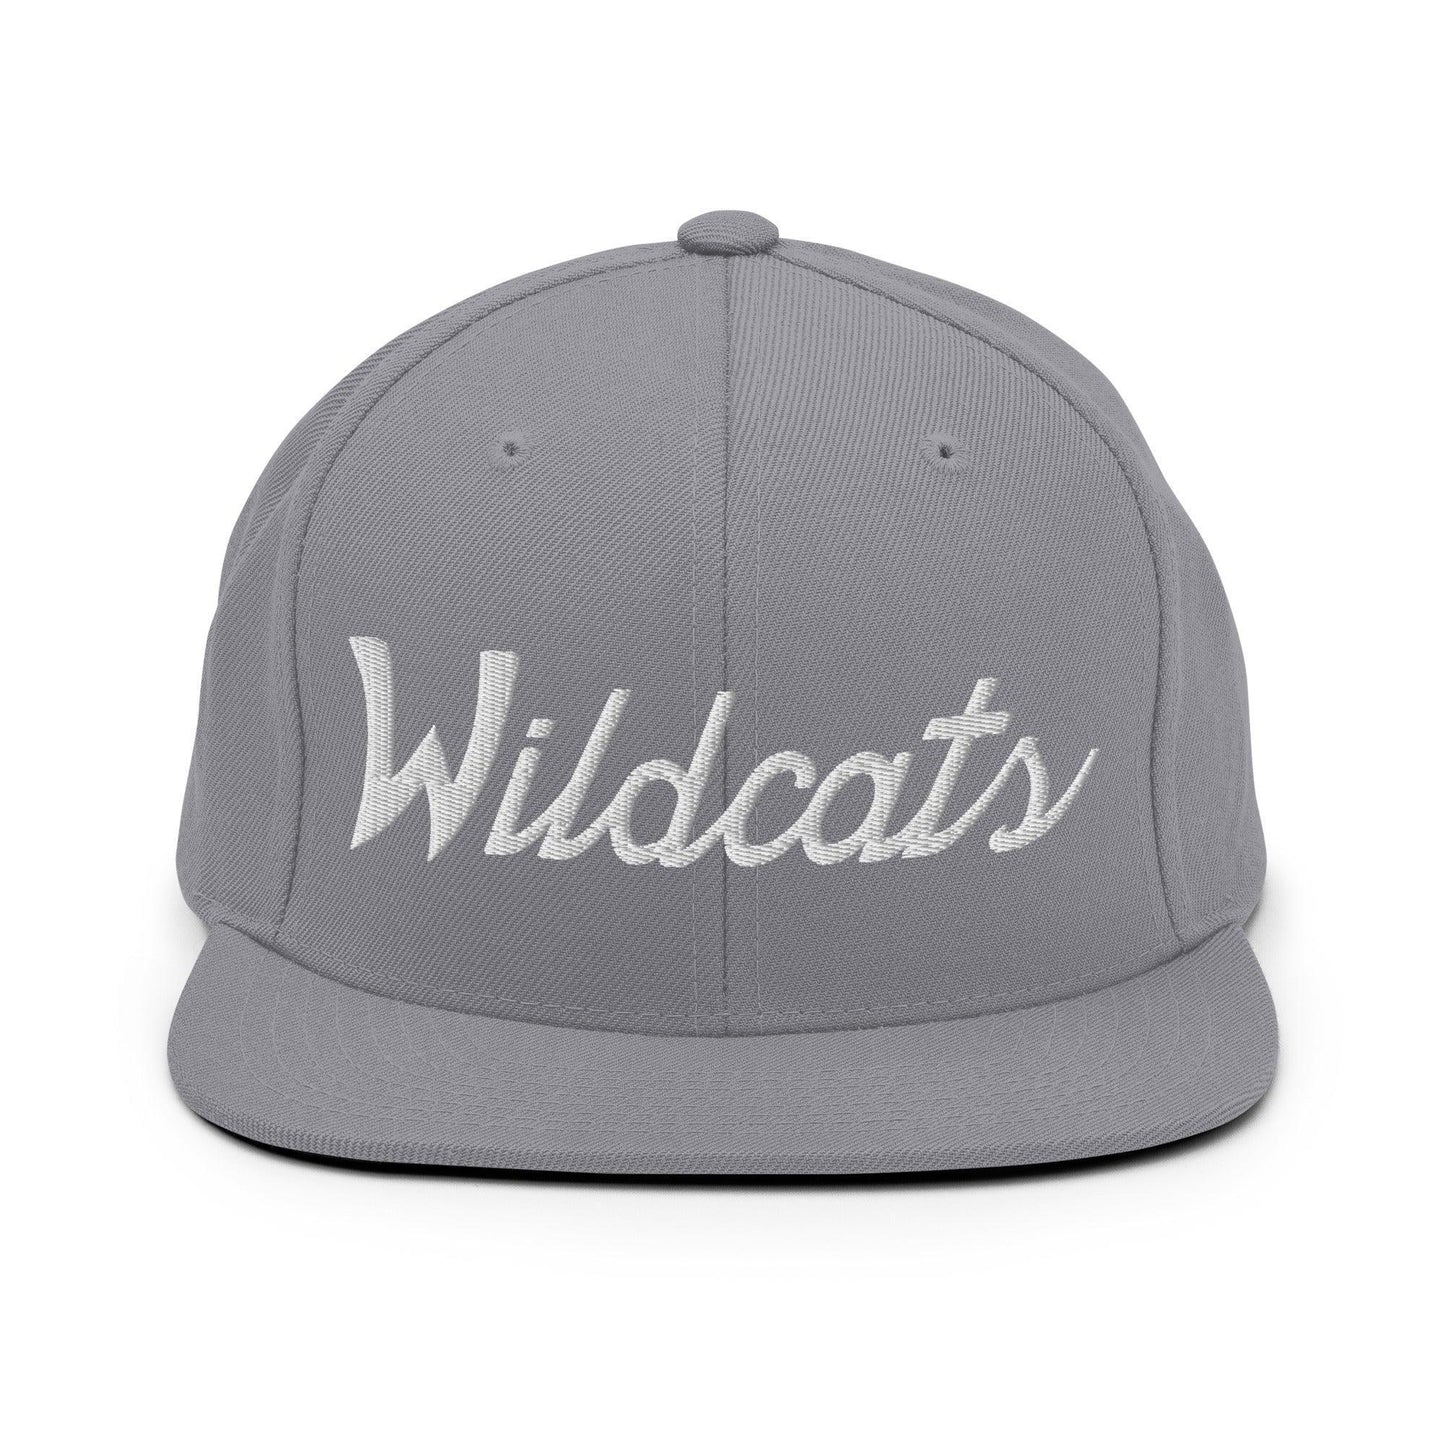 Wildcats School Mascot Script Snapback Hat Silver